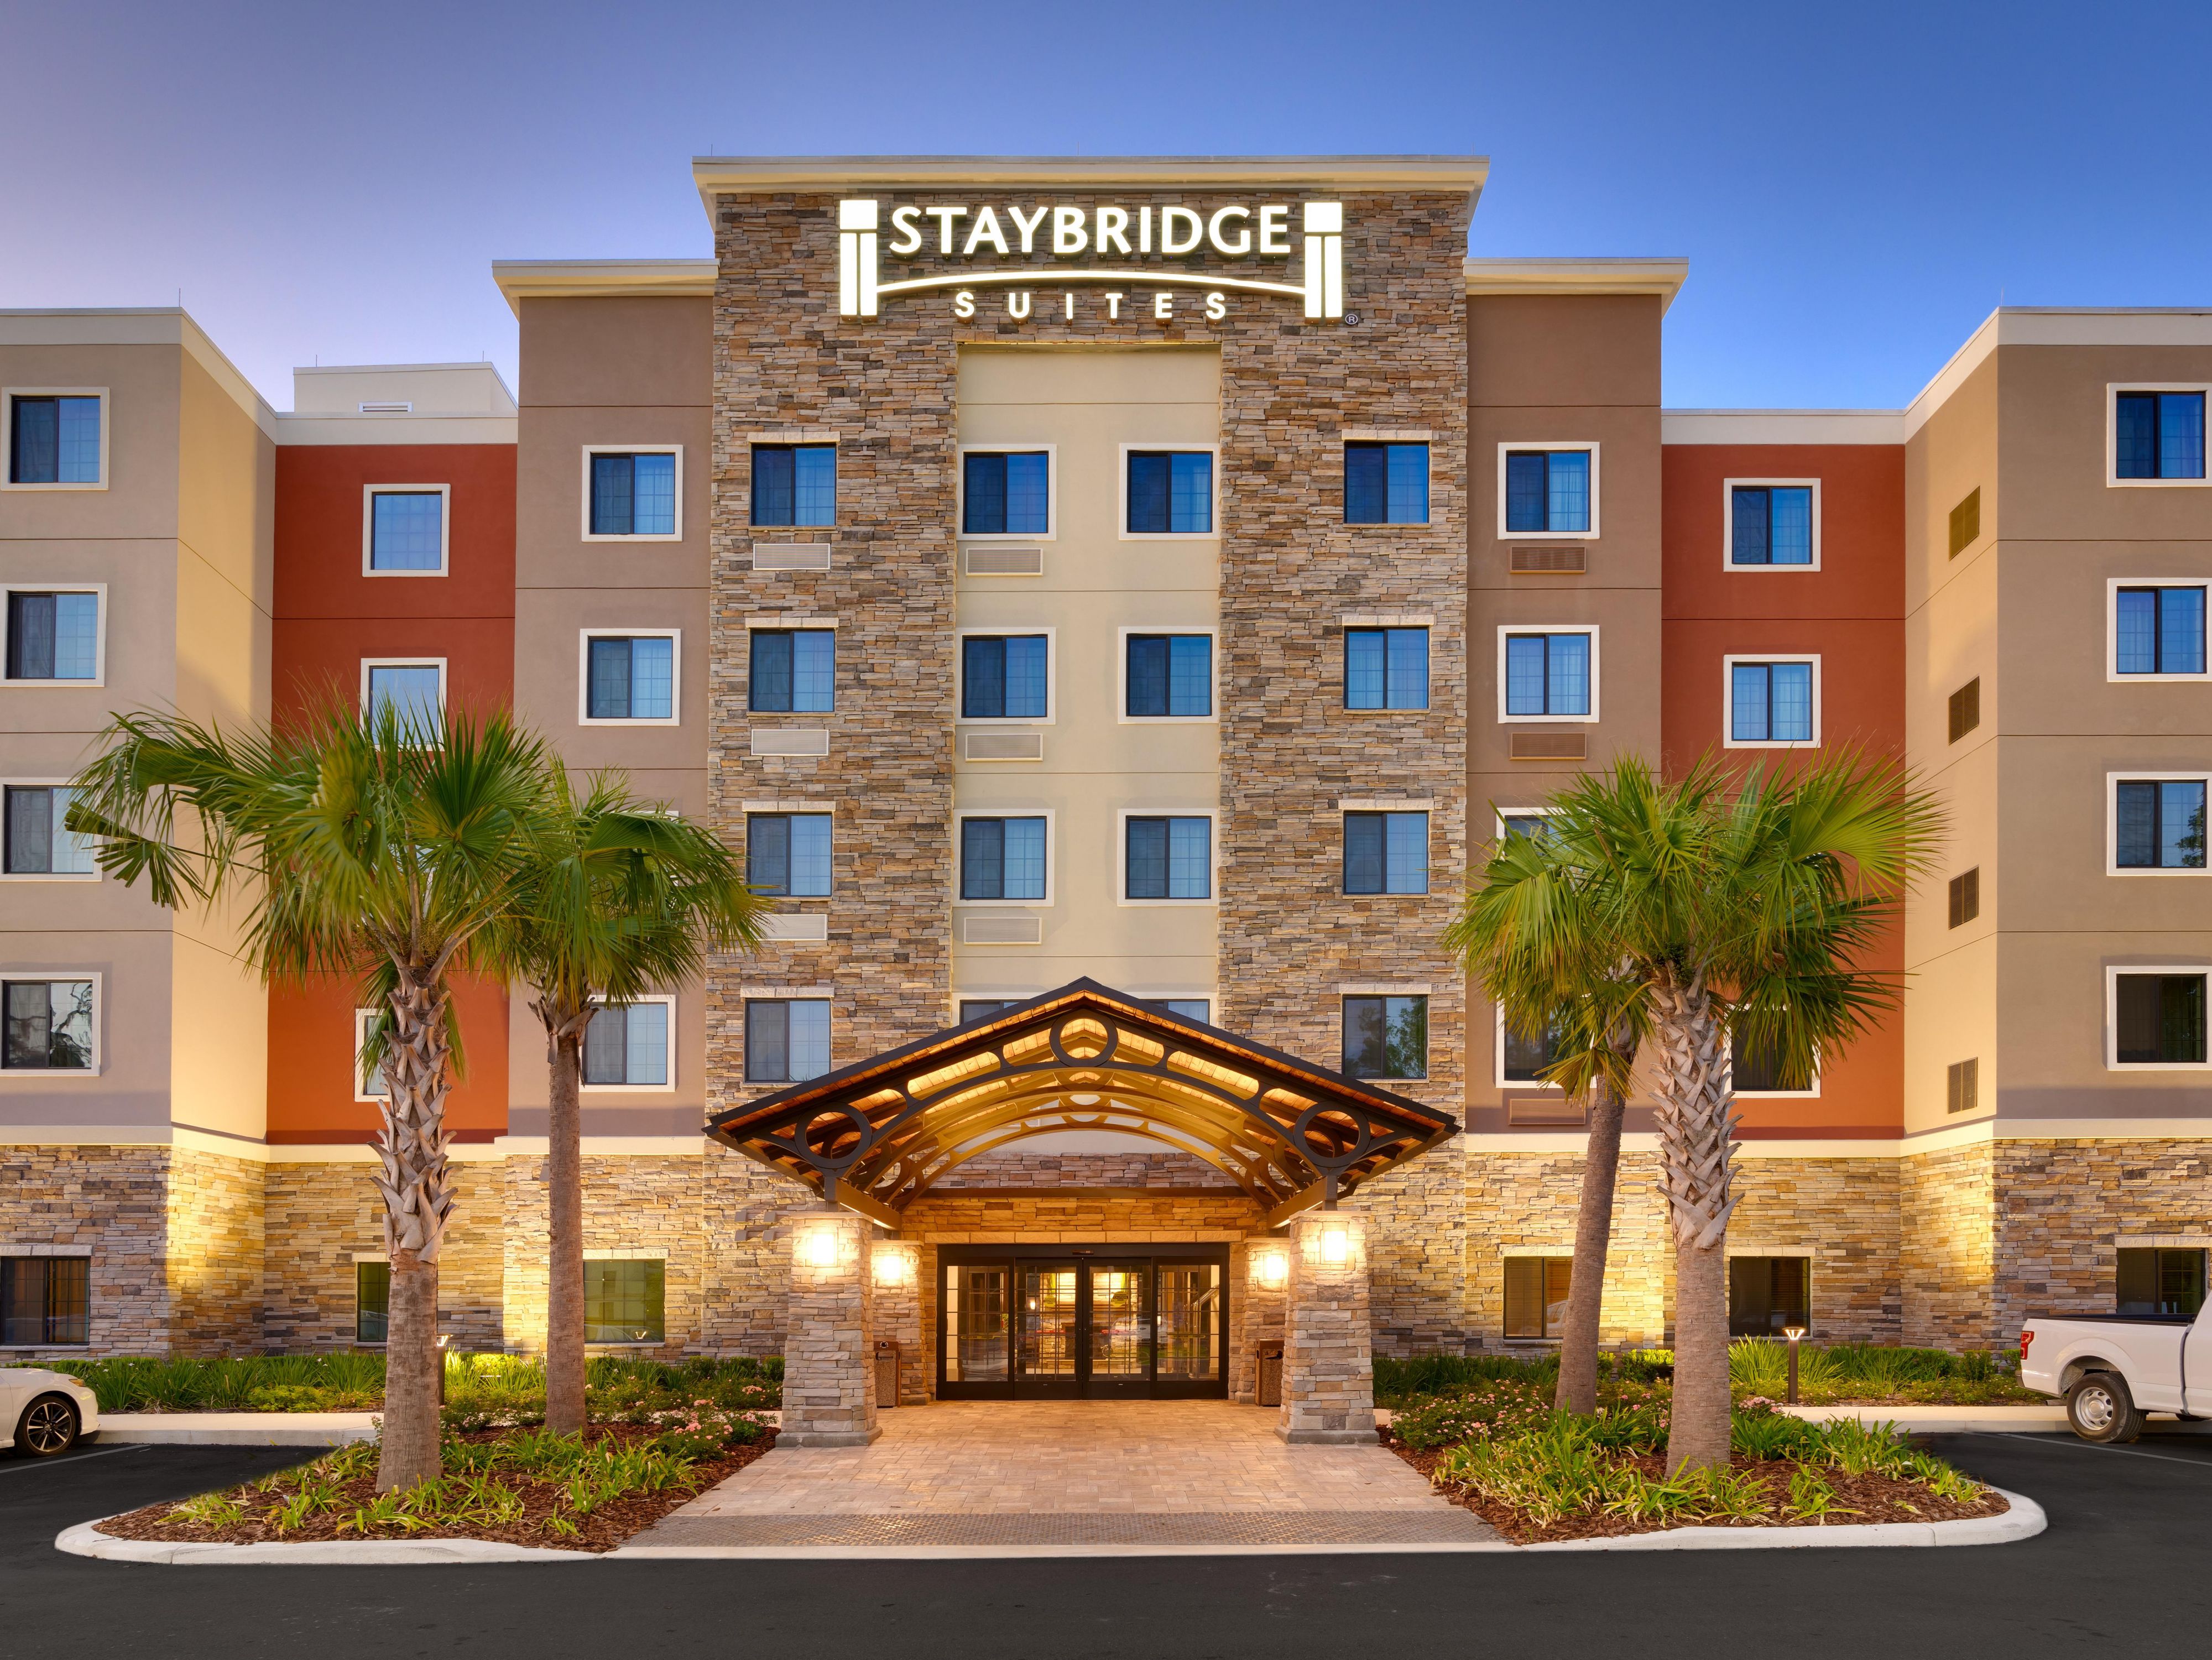 Staybridge Suites Gainesville 6164112836 4x3